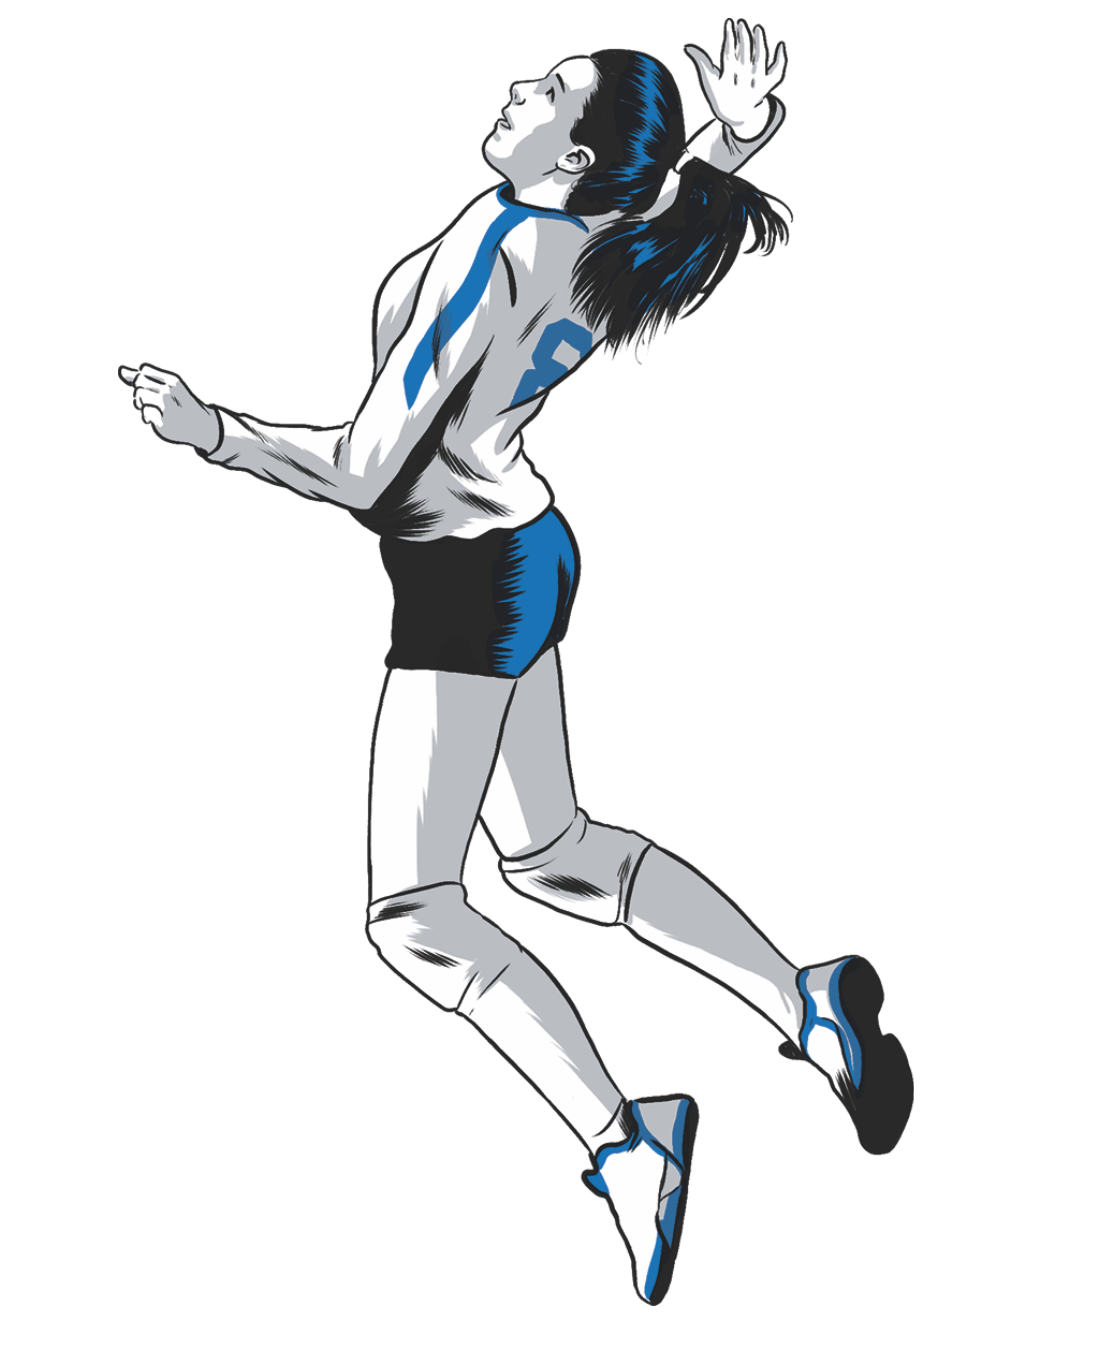 Volleyball player illustration